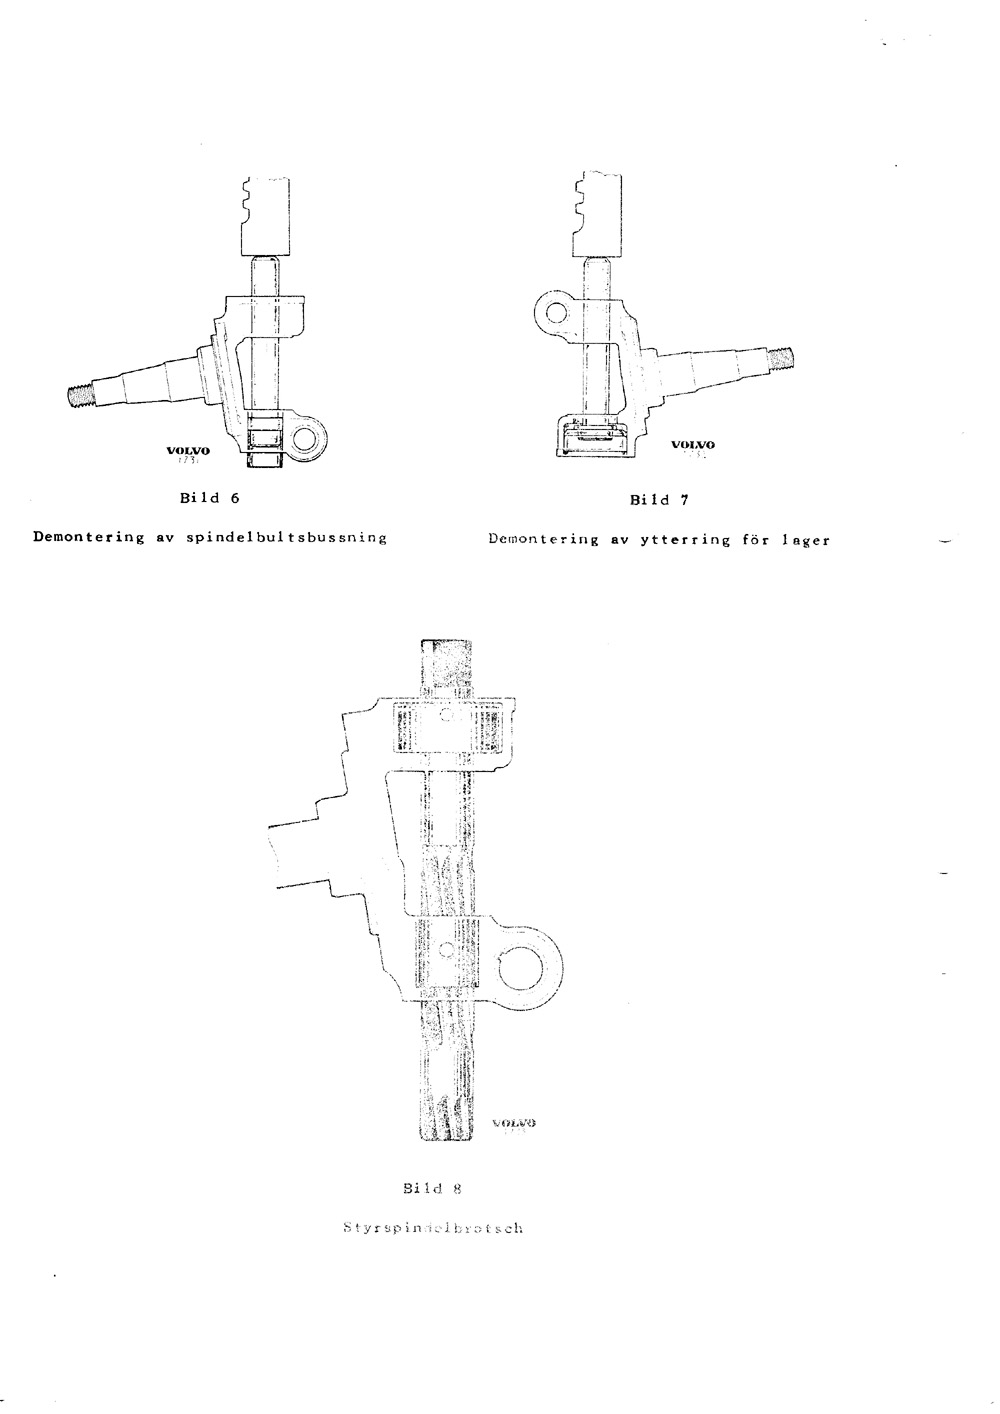 1050-10-V1 1951 Mars Verktyg for framhjulsspindeln